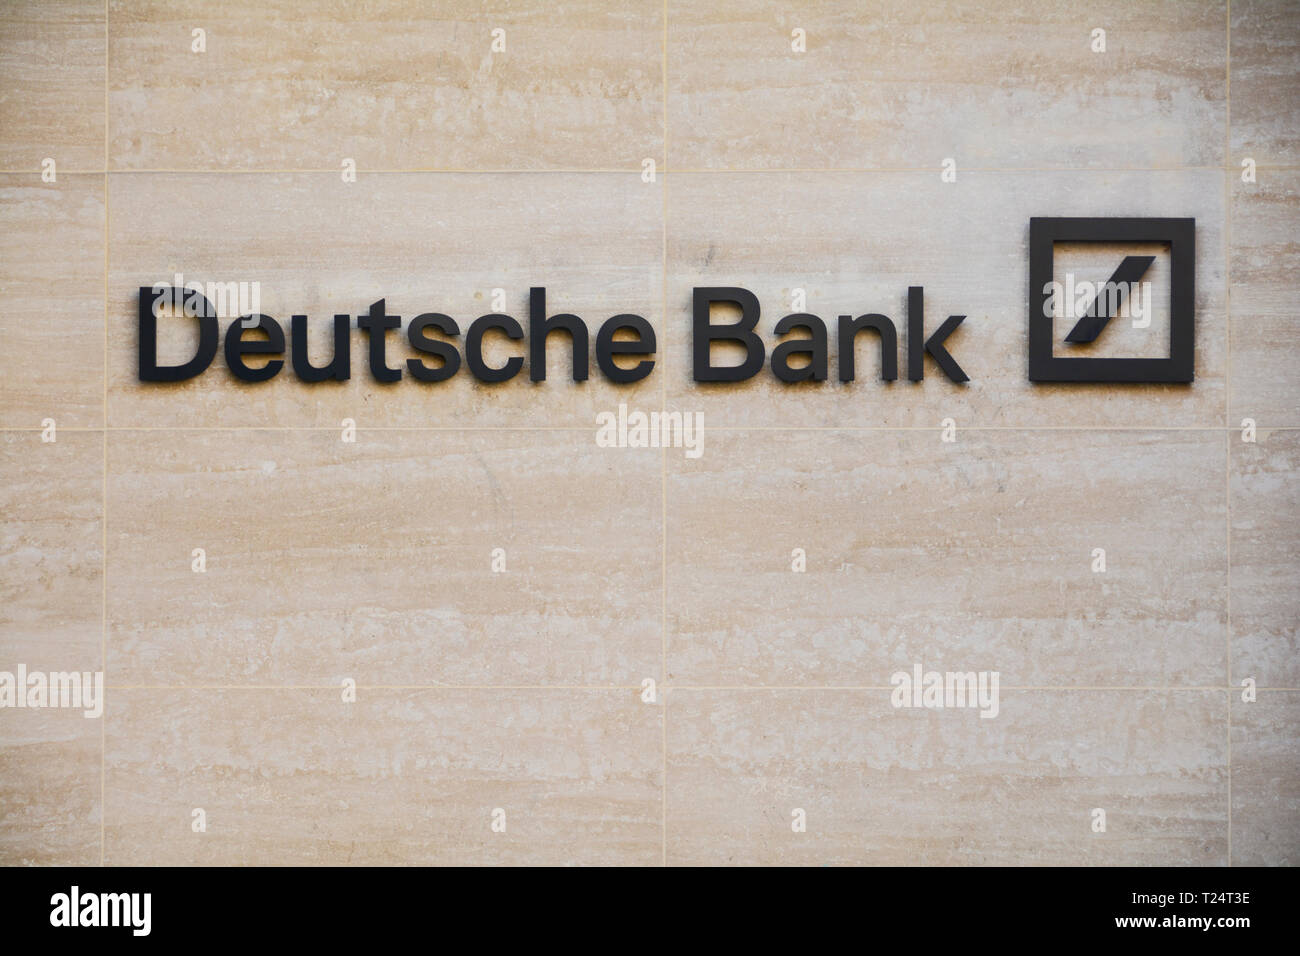 Deutsche Bank, Grand Winchester Street, Londres, EC2N 2D, UK Banque D'Images